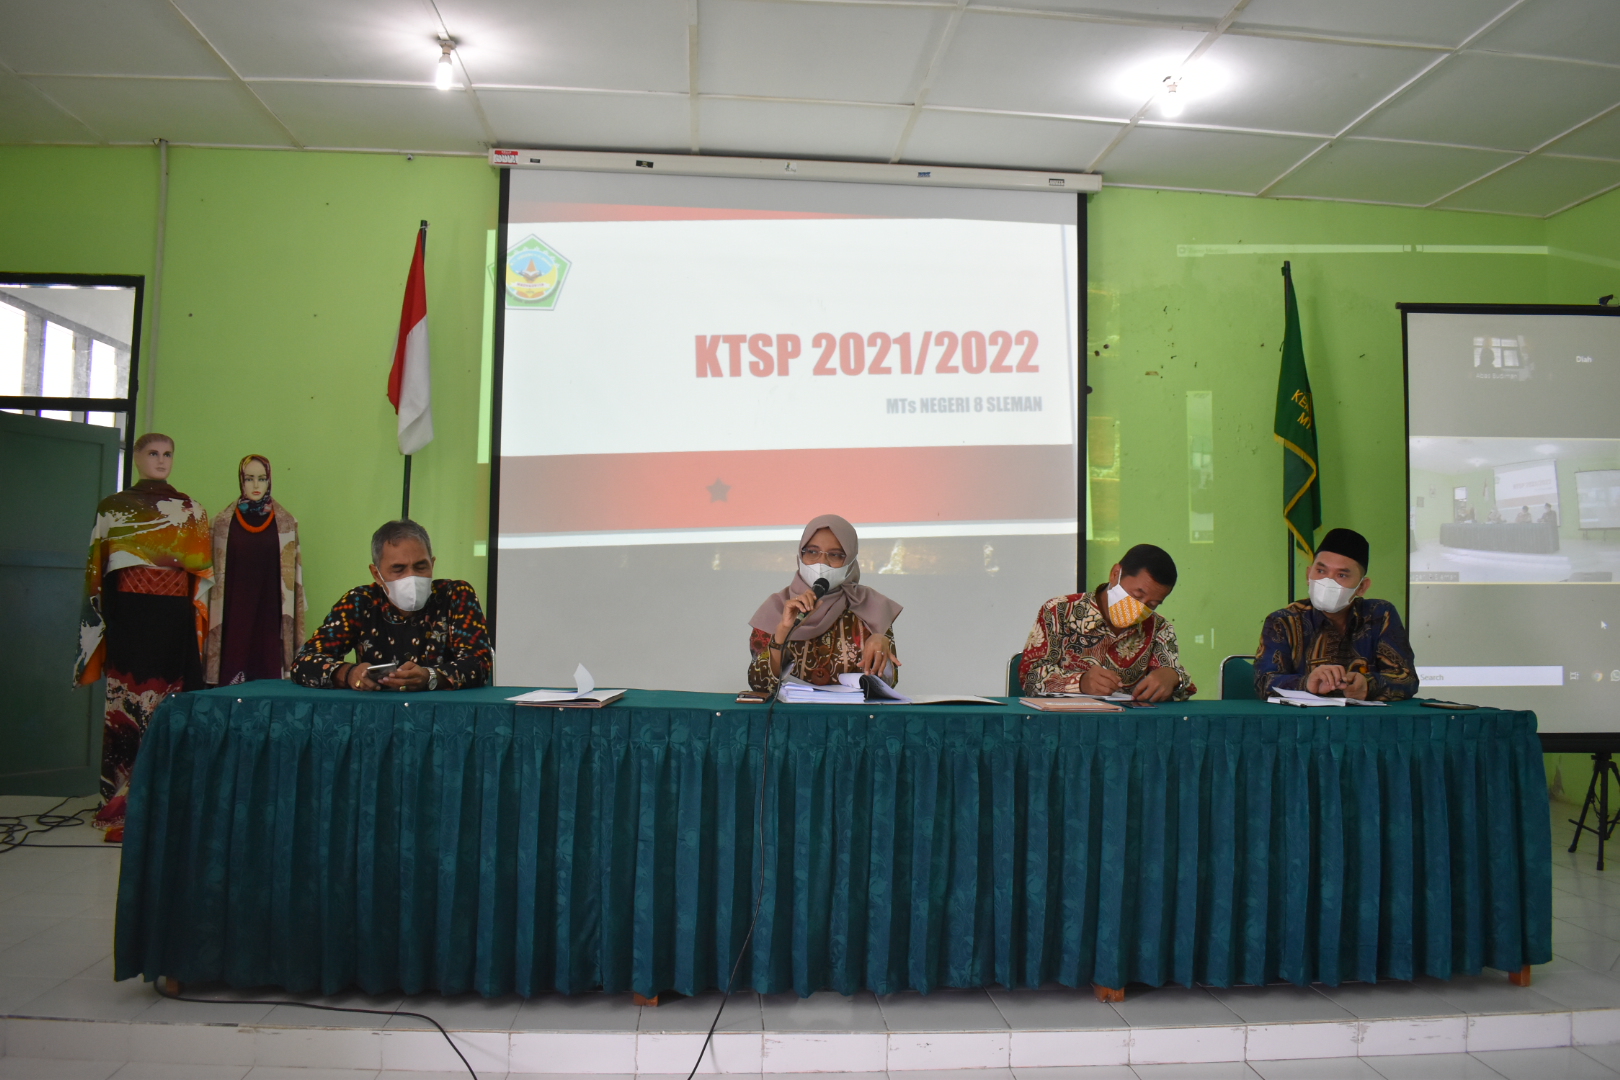 MTsN 8 Sleman Gelar Workshop Review KTSP 2021/2022